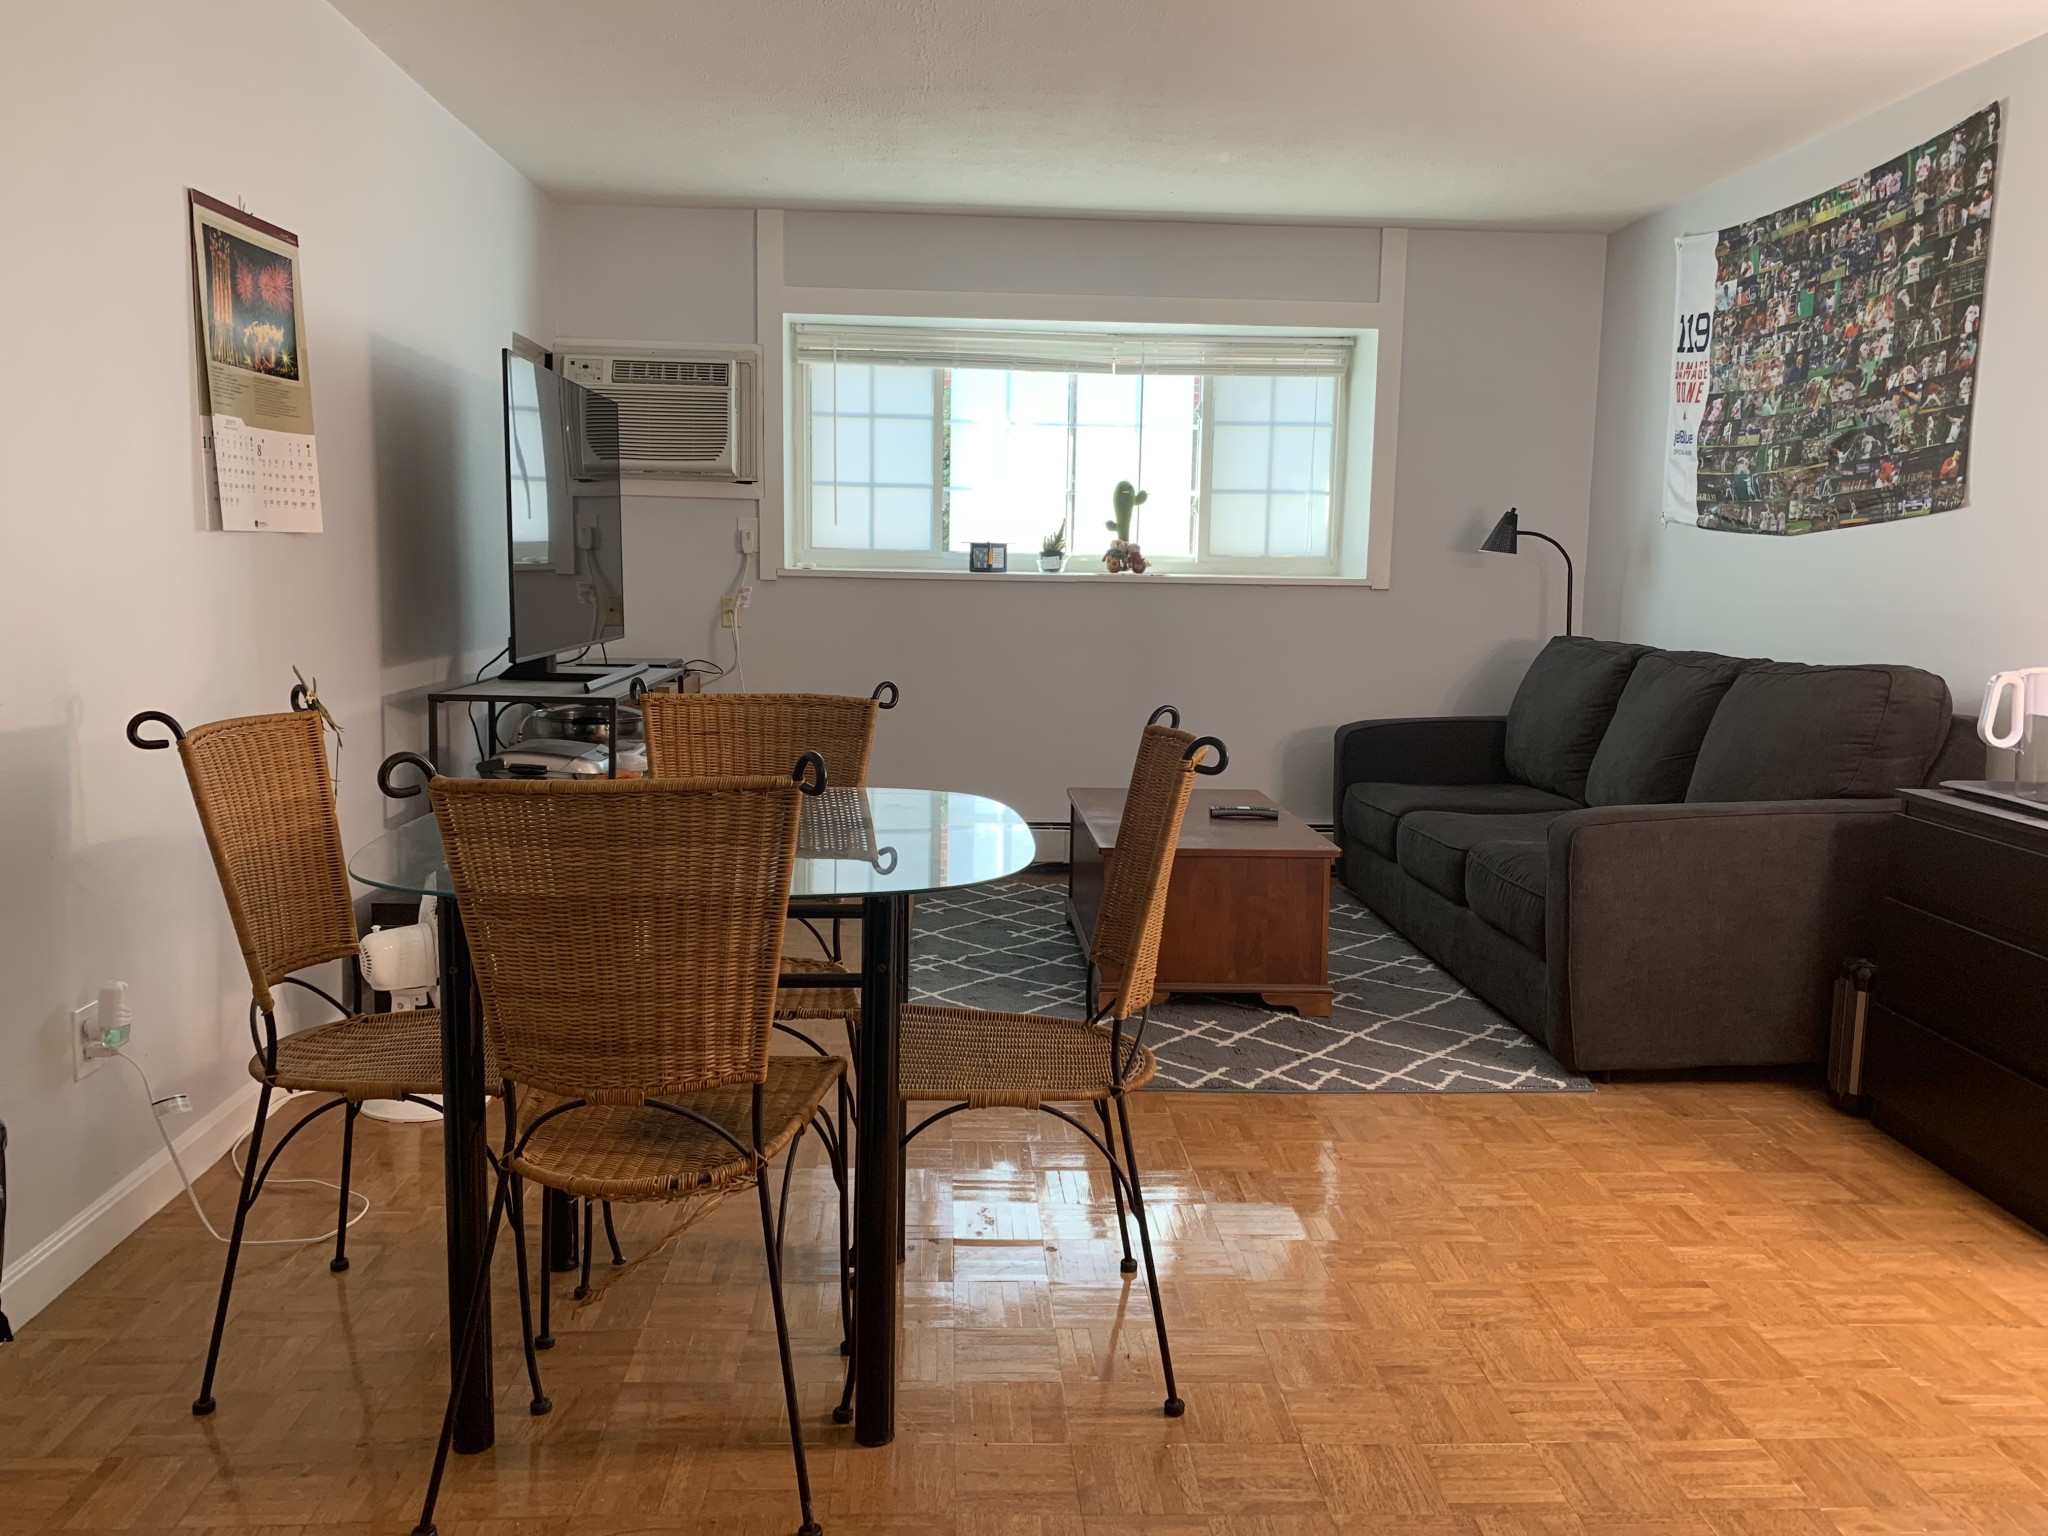 Photos of apartment on Staples Ave.,Everett MA 02149